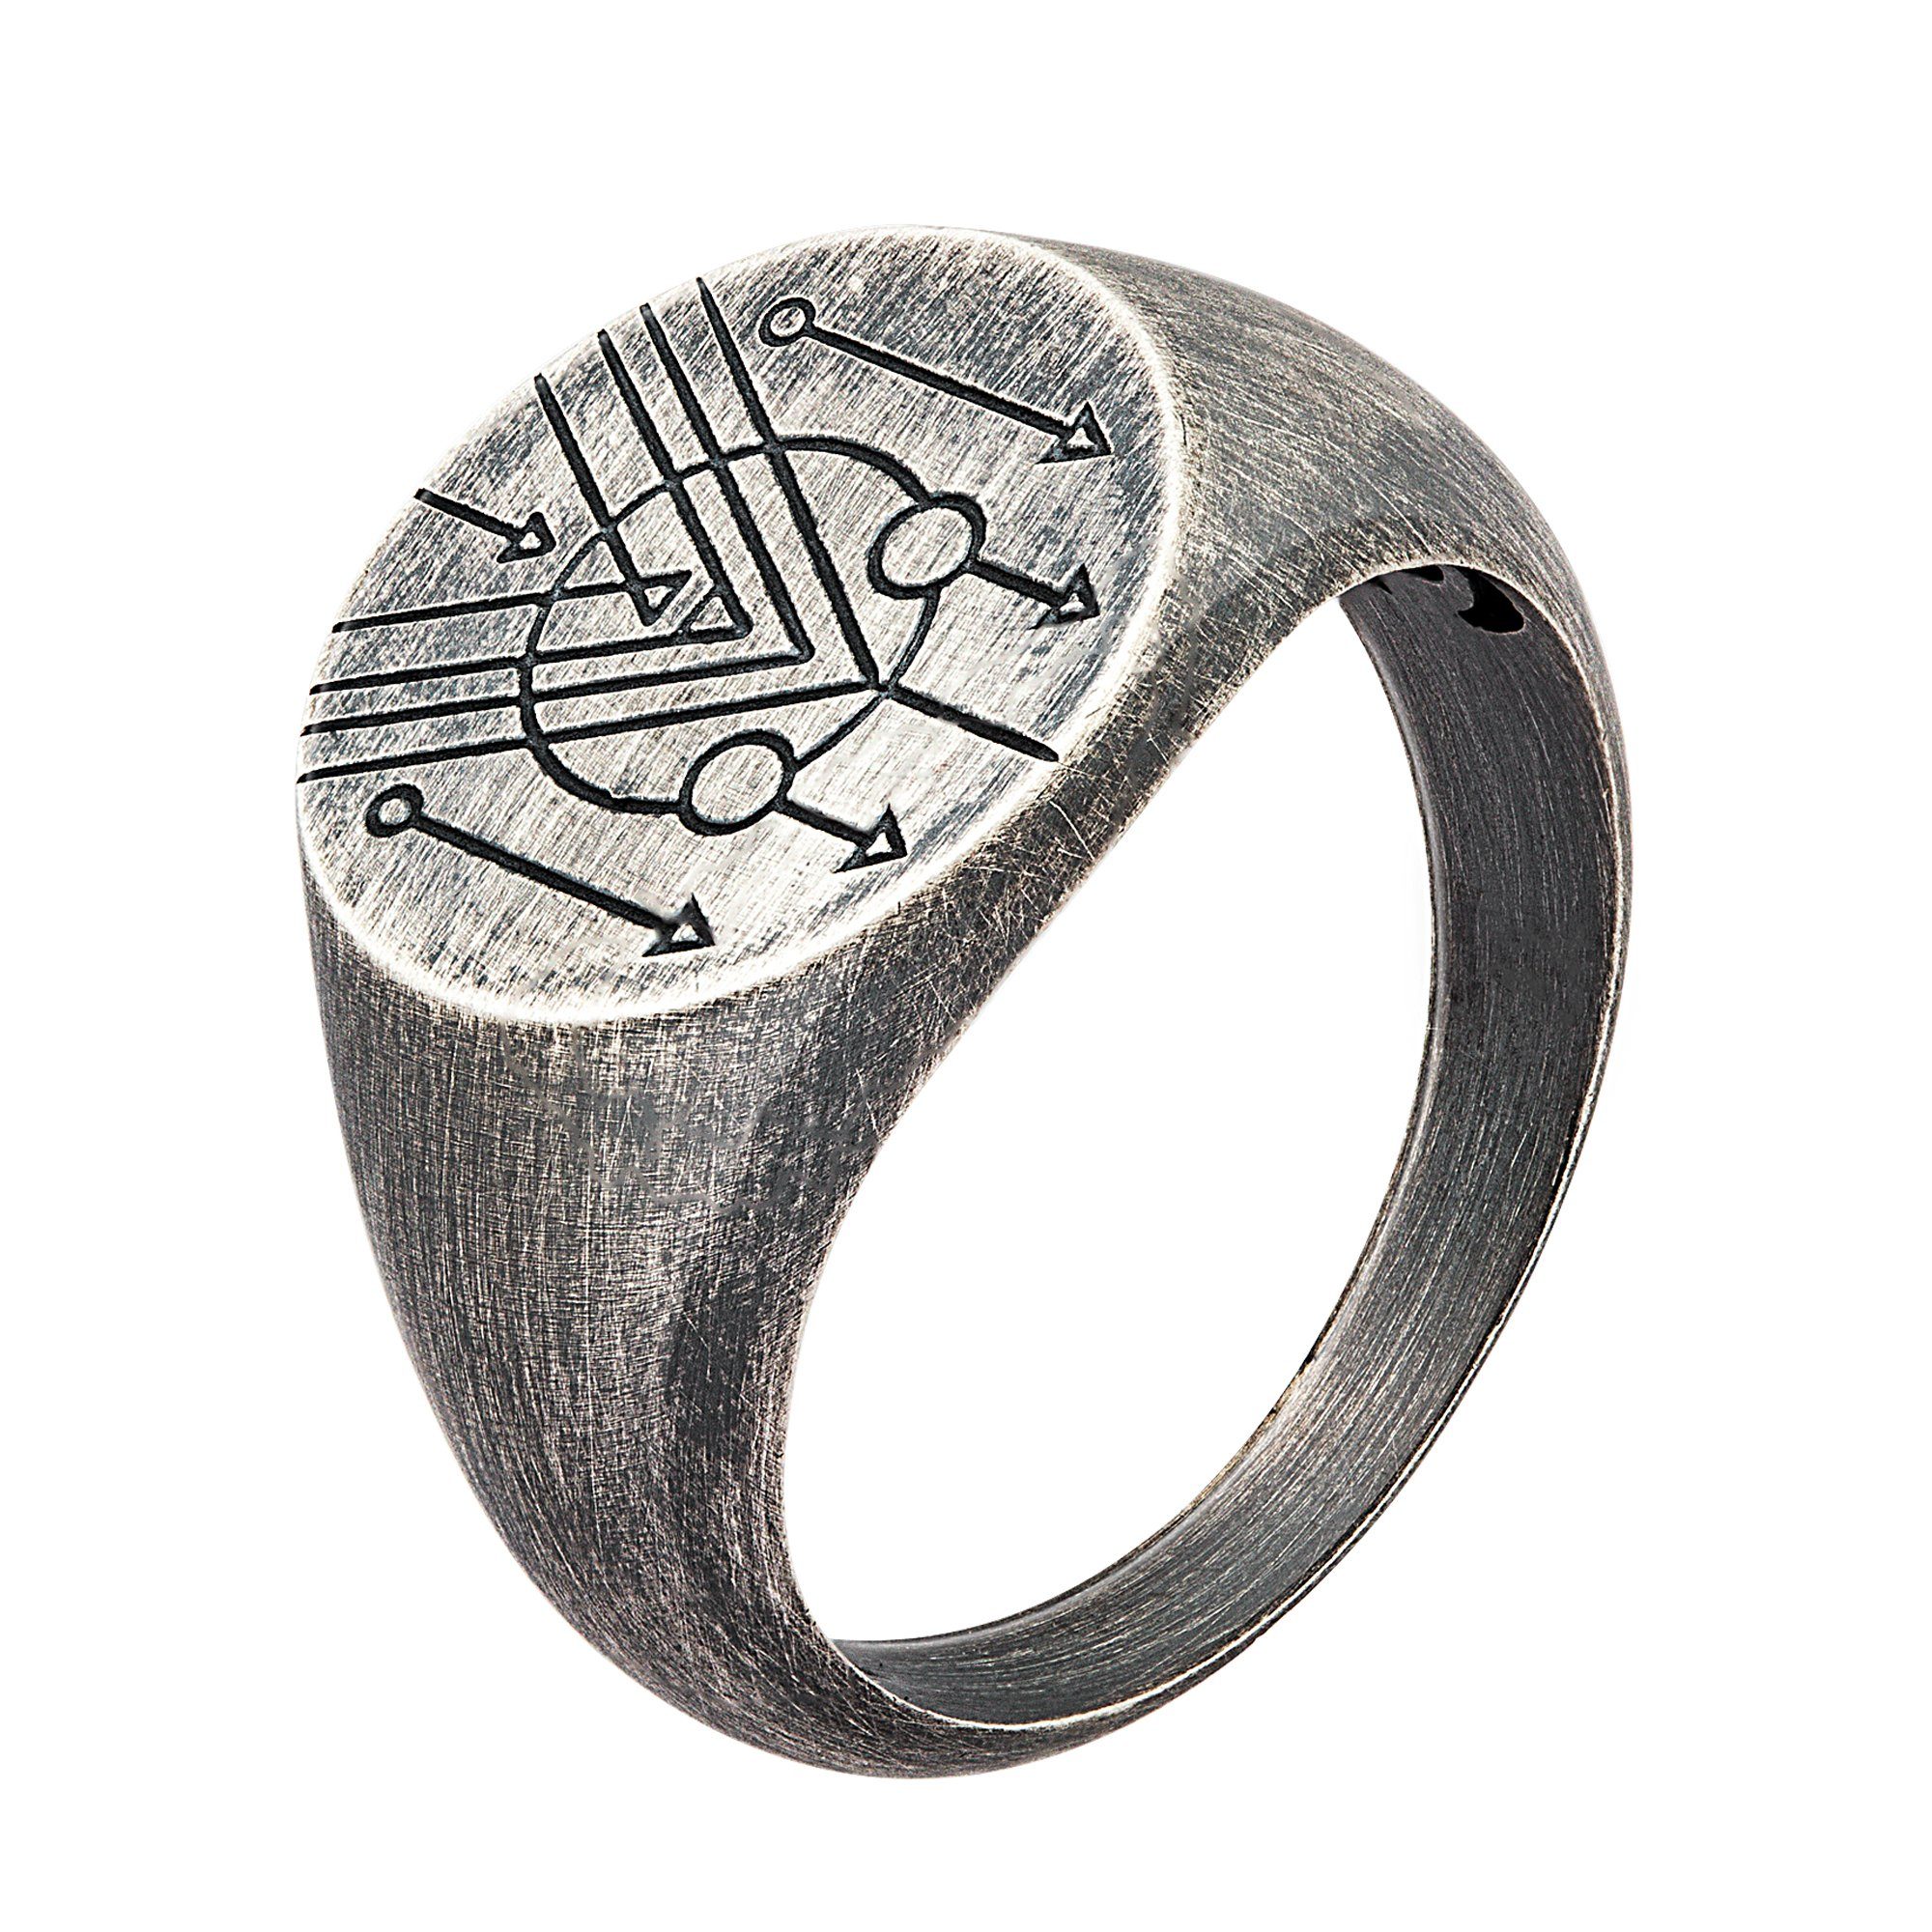 CAÏ Fingerring 925 Motiv Siegelring oxidiert Silber Kreis grau matt Tattoo